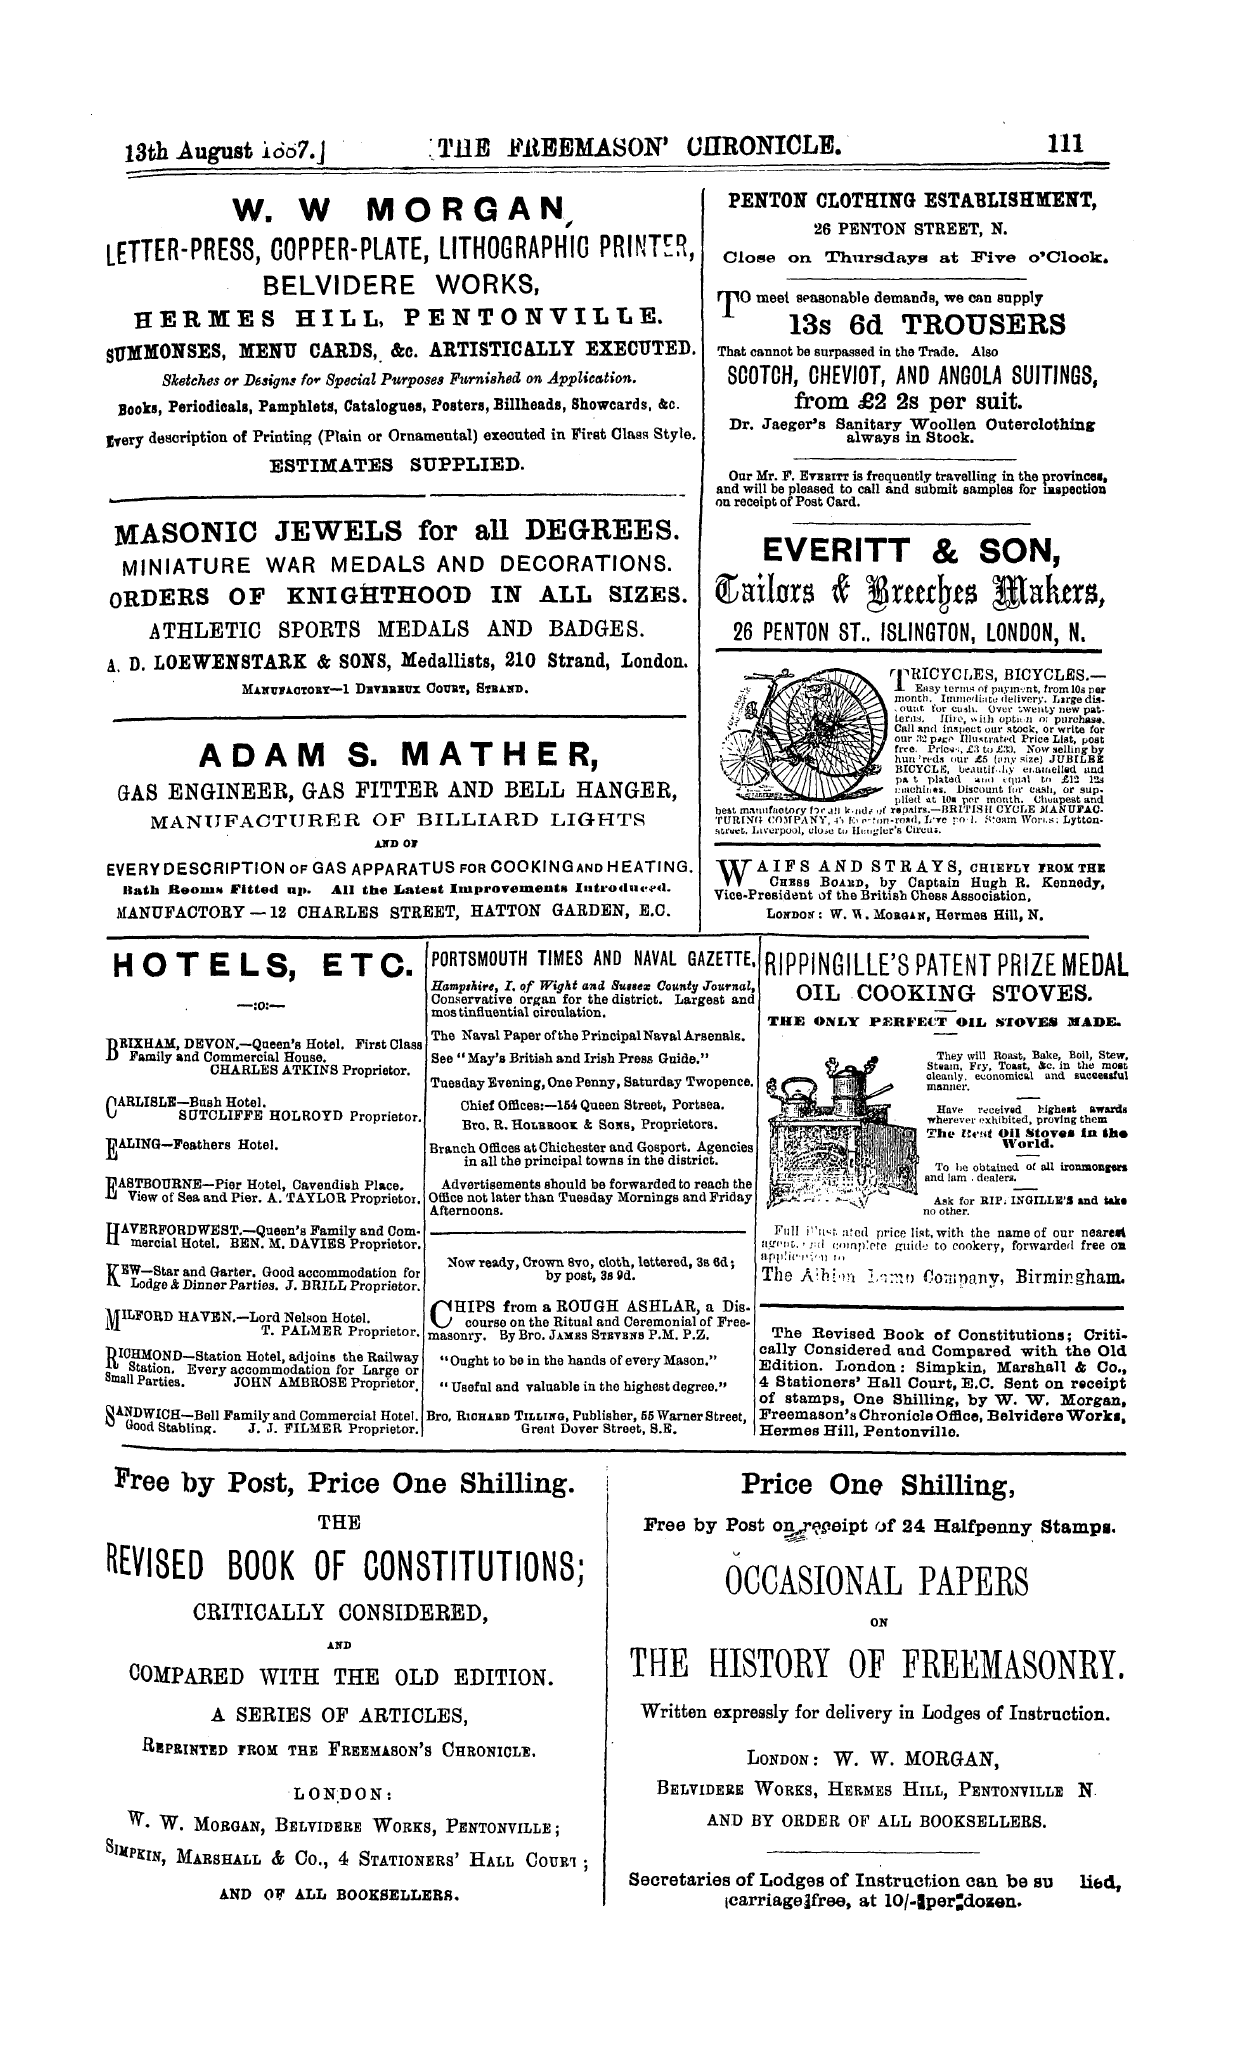 The Freemason's Chronicle: 1887-08-13 - Ad01512